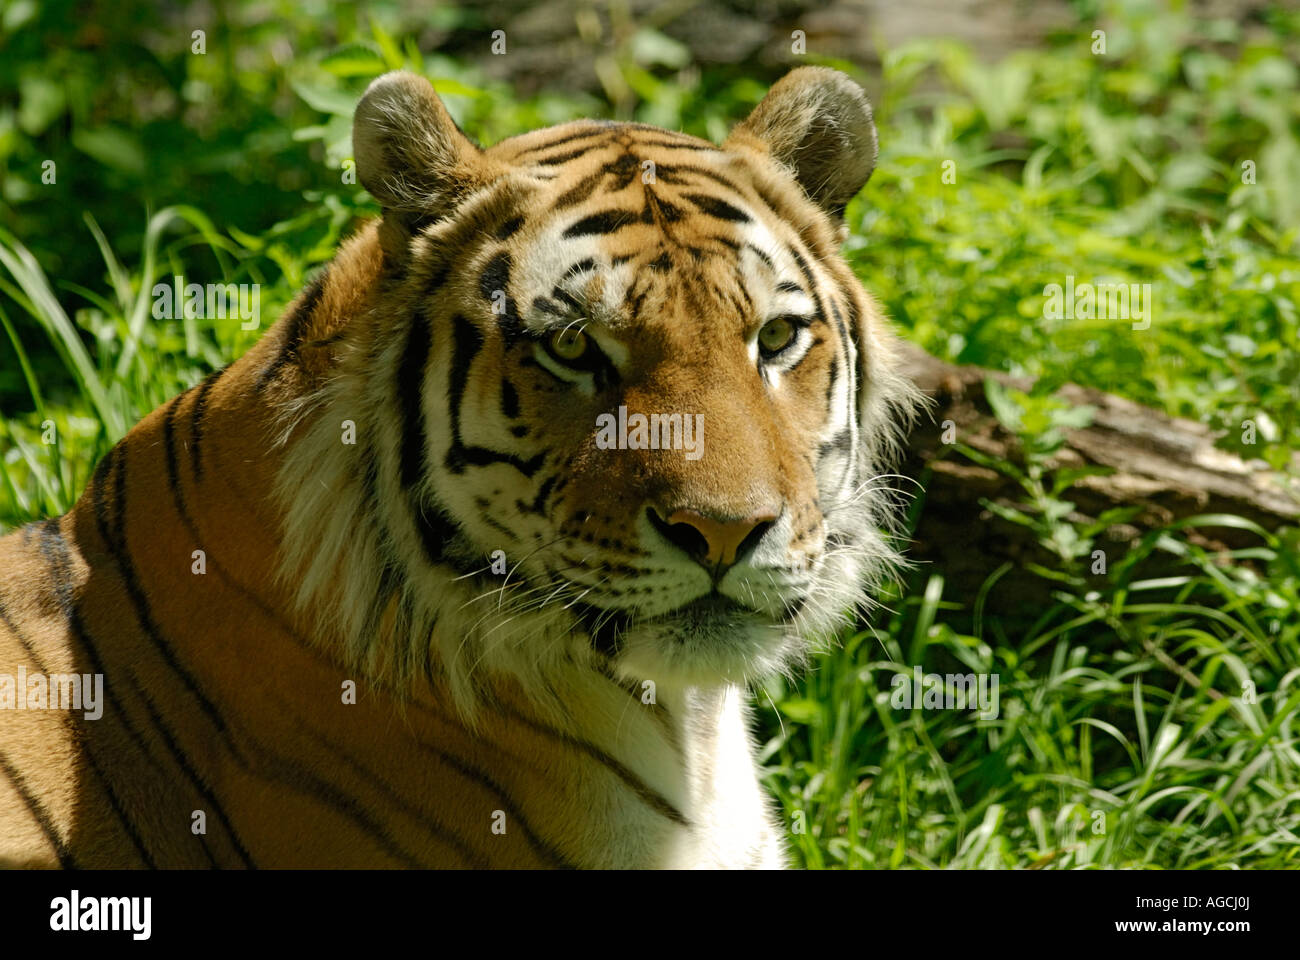 Siberian or Amur tiger looking at camera Stock Photo